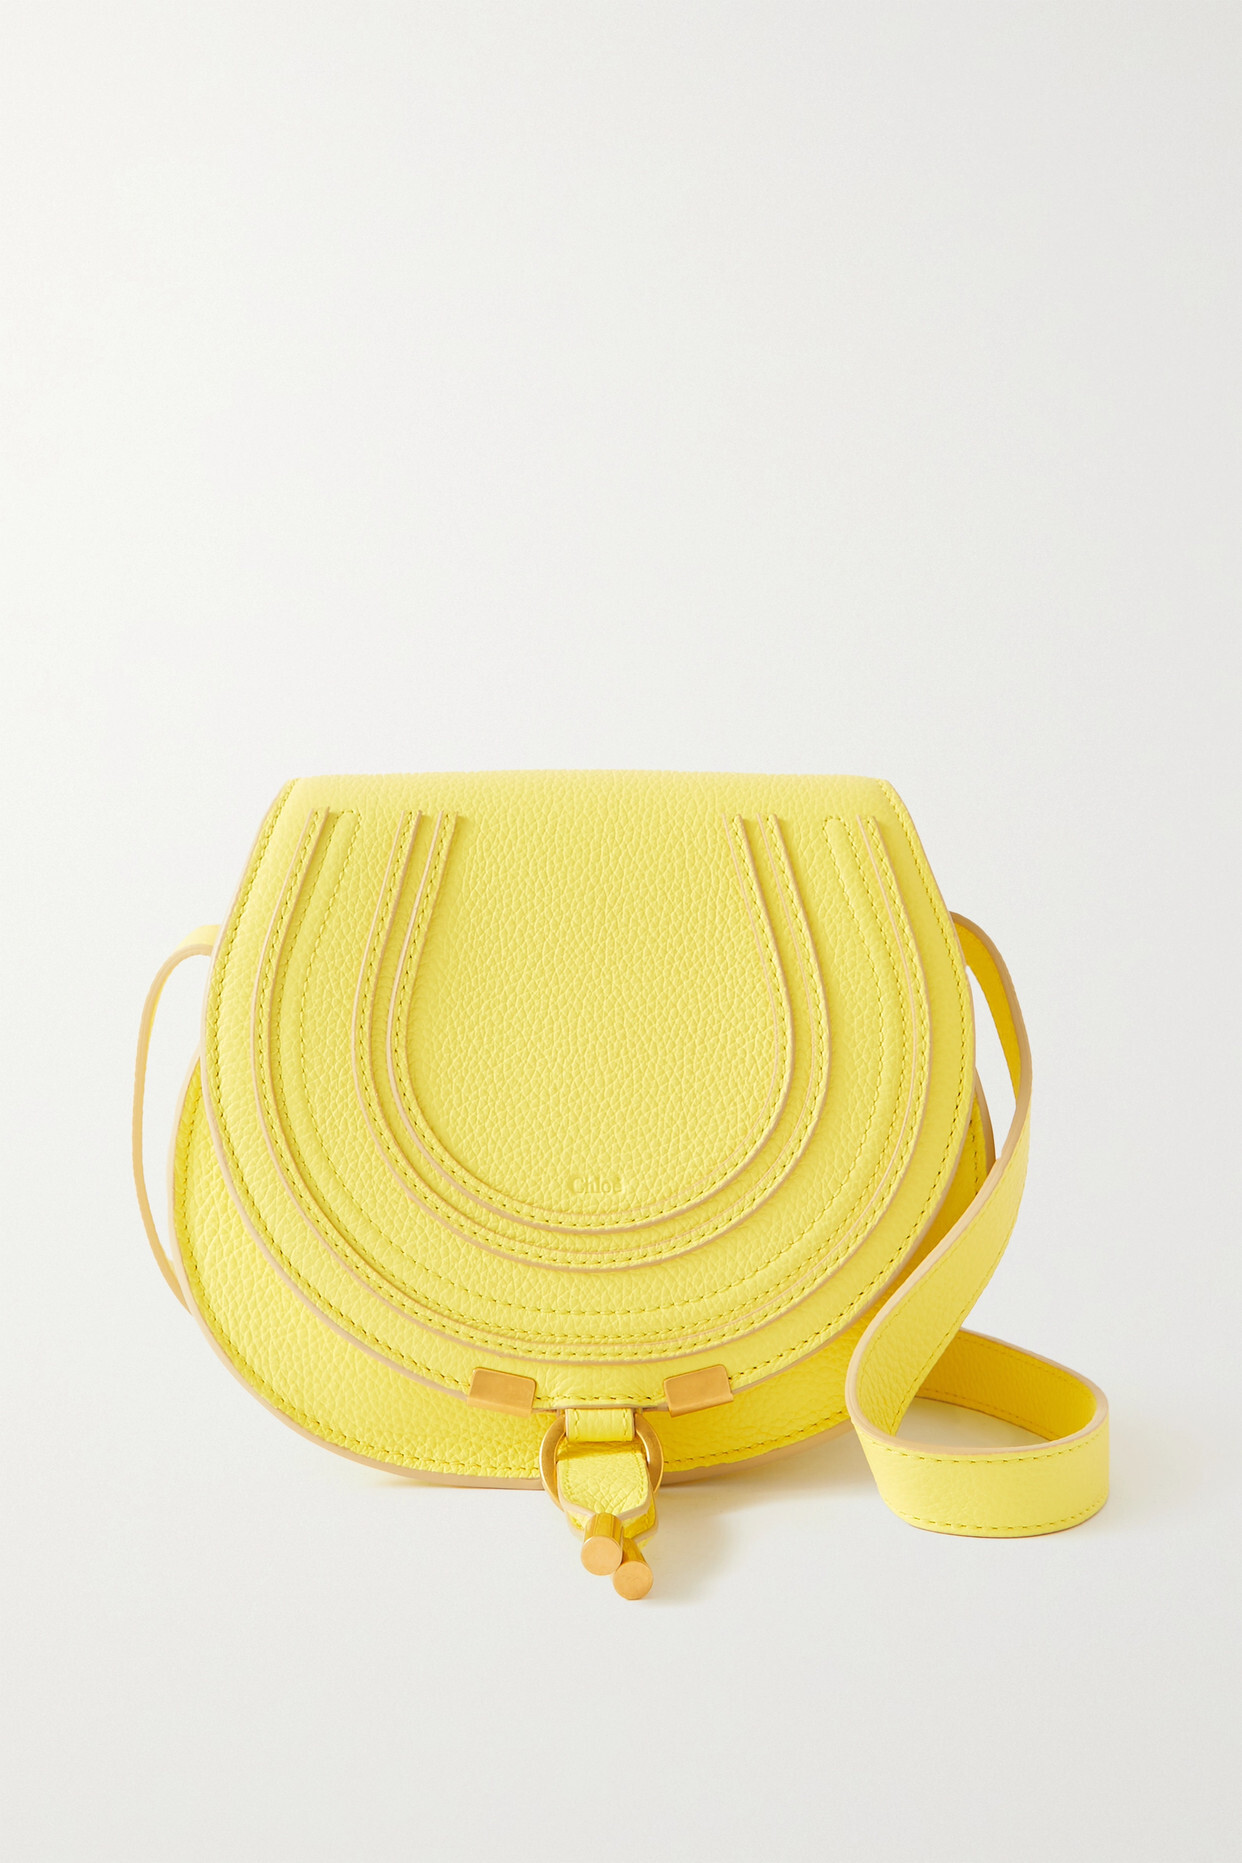 Chloé Chloé - + Net Sustain Marcie Mini Textured-leather Shoulder Bag - Yellow